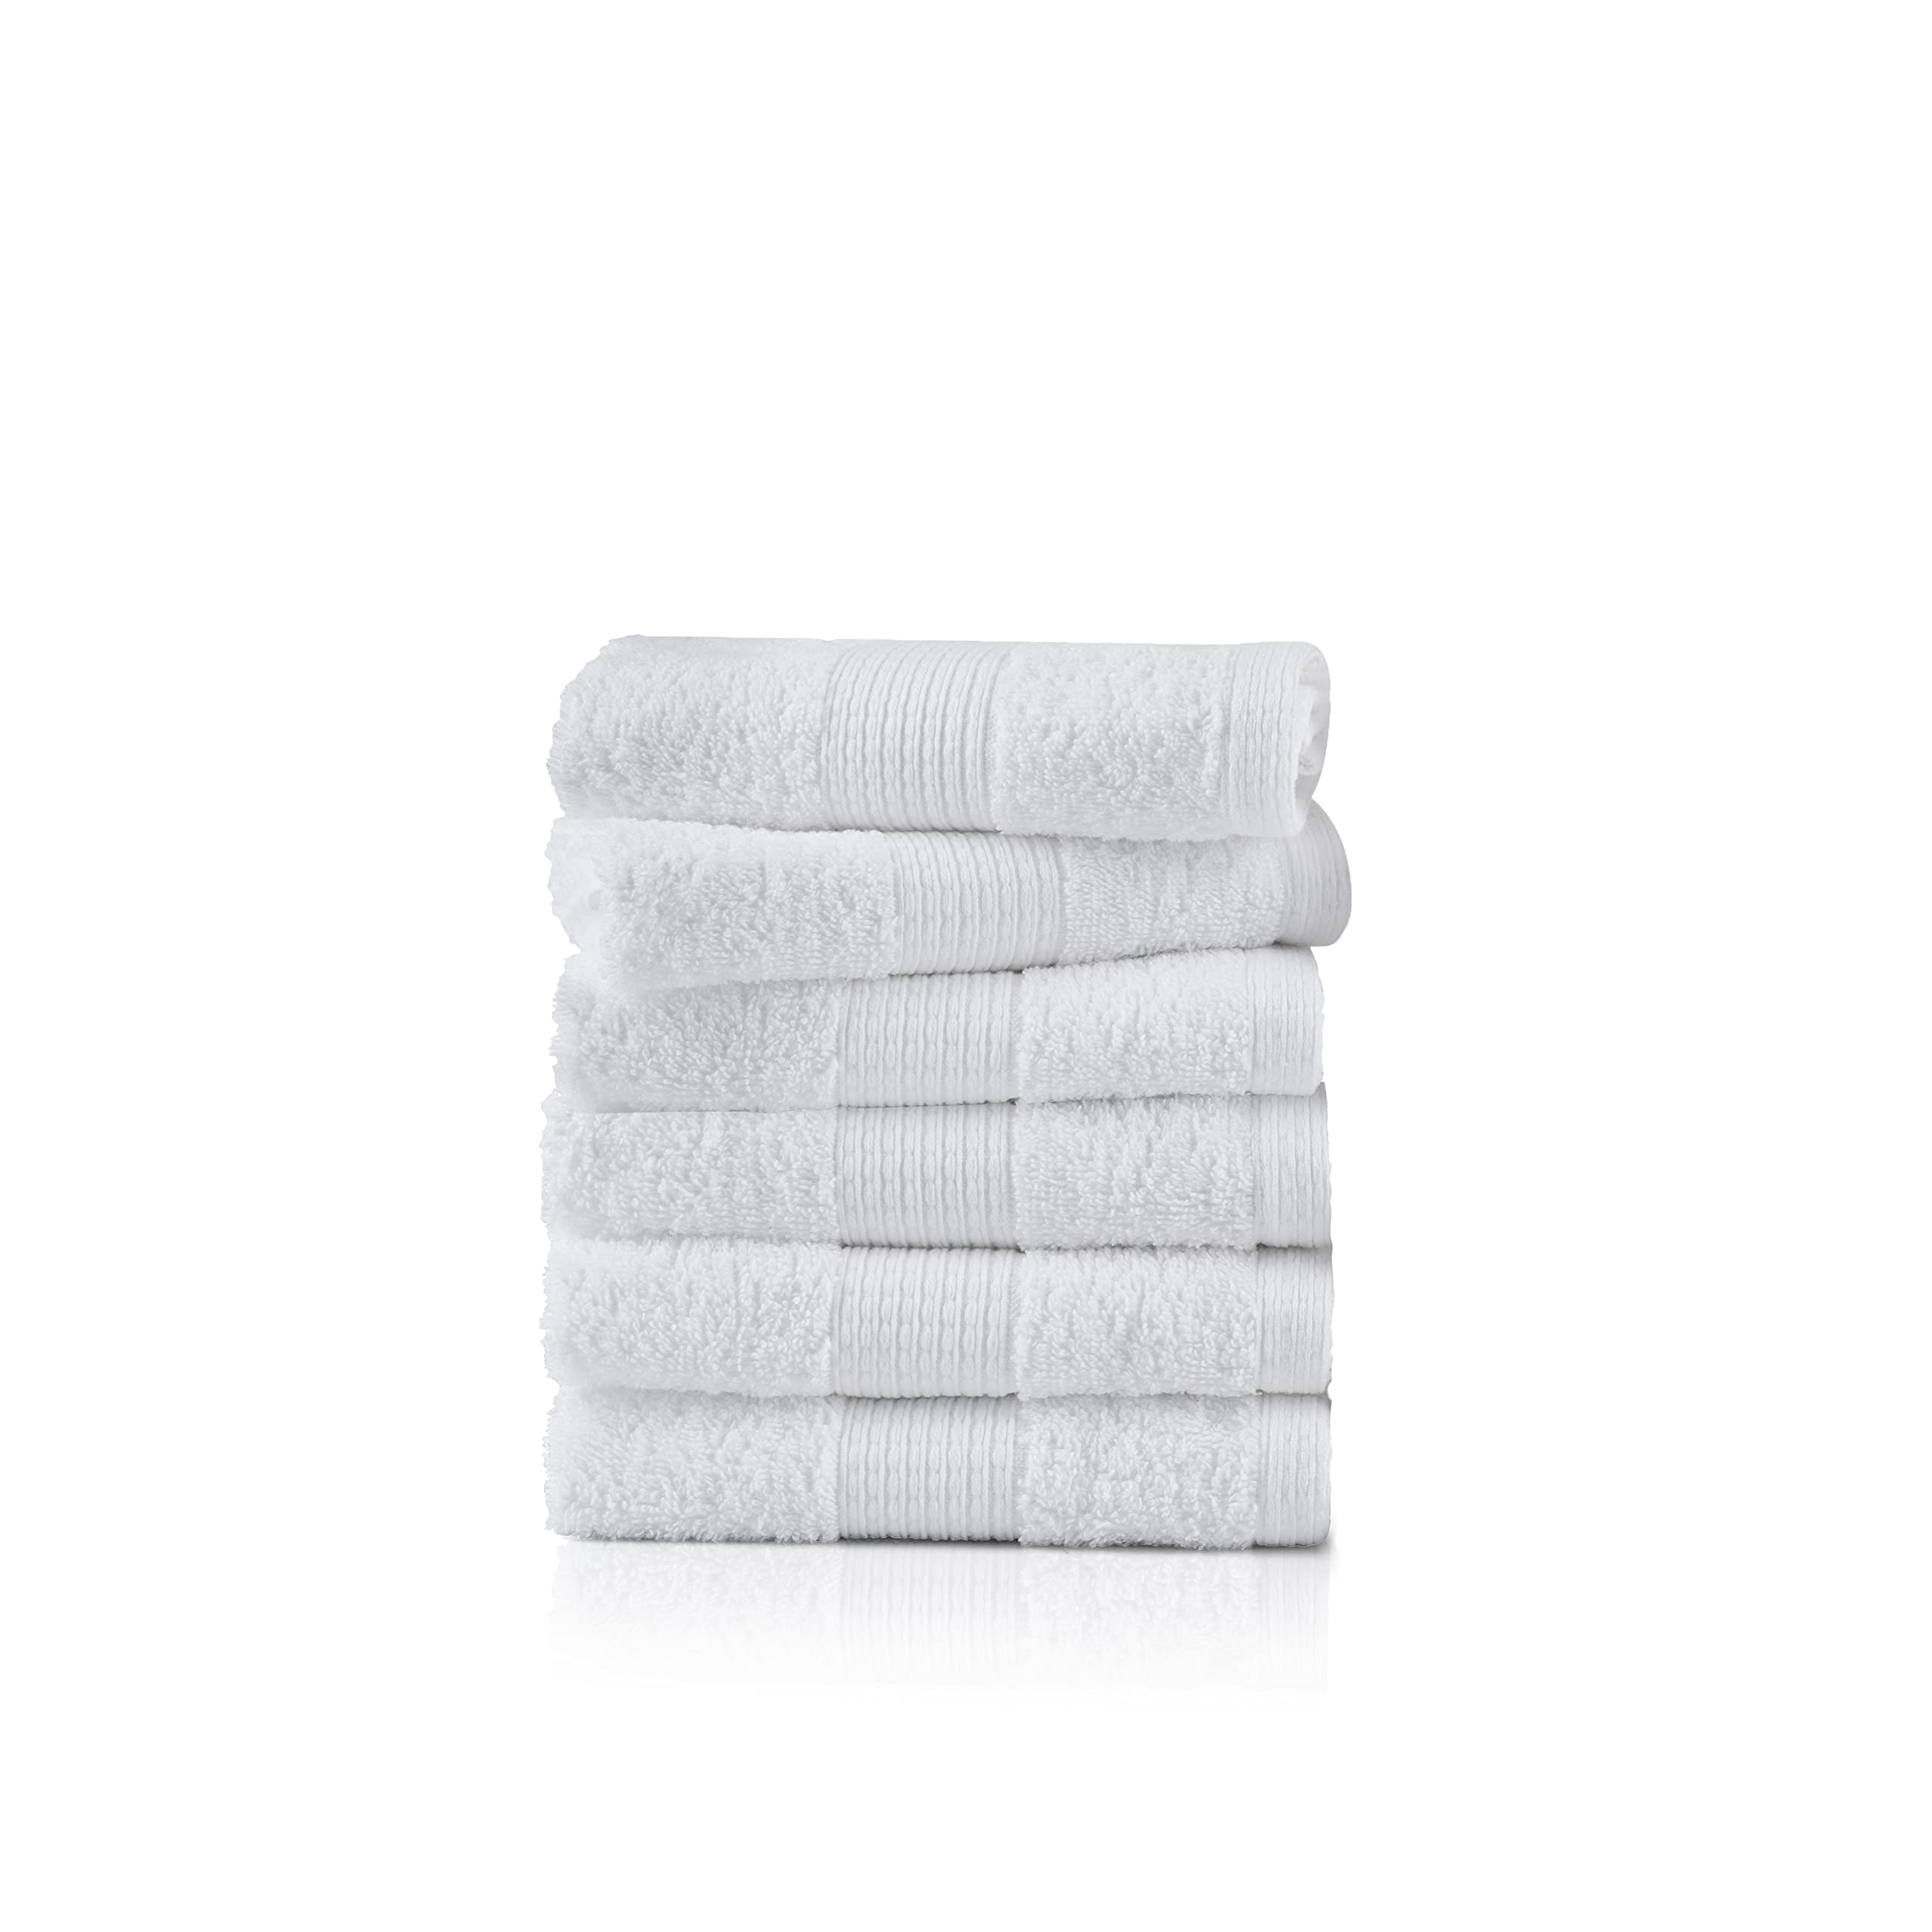 LANE LINEN 6 Pc Hand Towels for Bathroom Set, 100% Cotton Super Absorbent  Bathroom Hand Towel Set, Ultra Soft Premium Hotel Quality - White 6 Piece  Hand Towel White